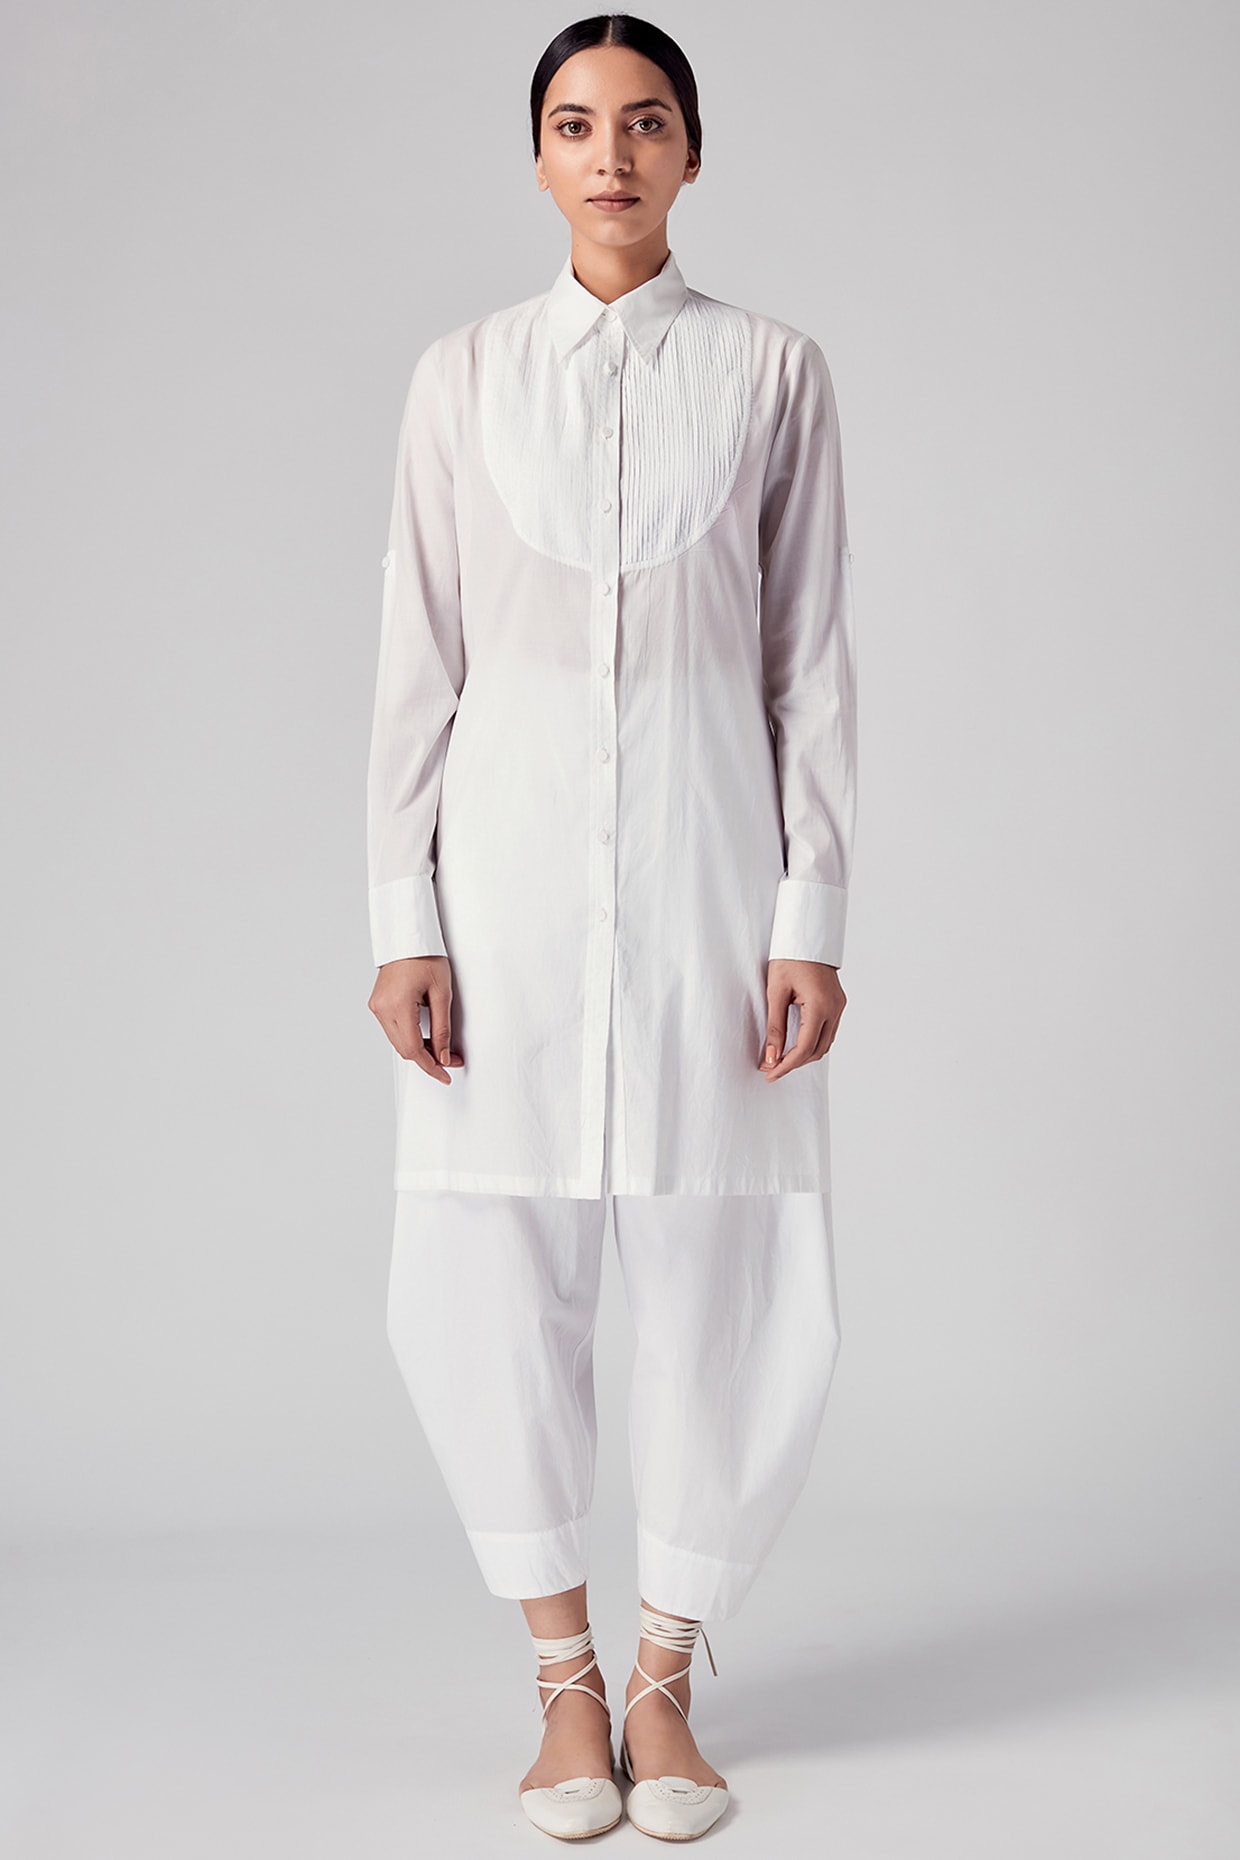 Ishnya Salwar Suits and Sets  Buy Ishnya Kudi With A Swag  Lucknowi  Kurta With Tulip Pants 20  Off White Set of 2 Online  Nykaa Fashion